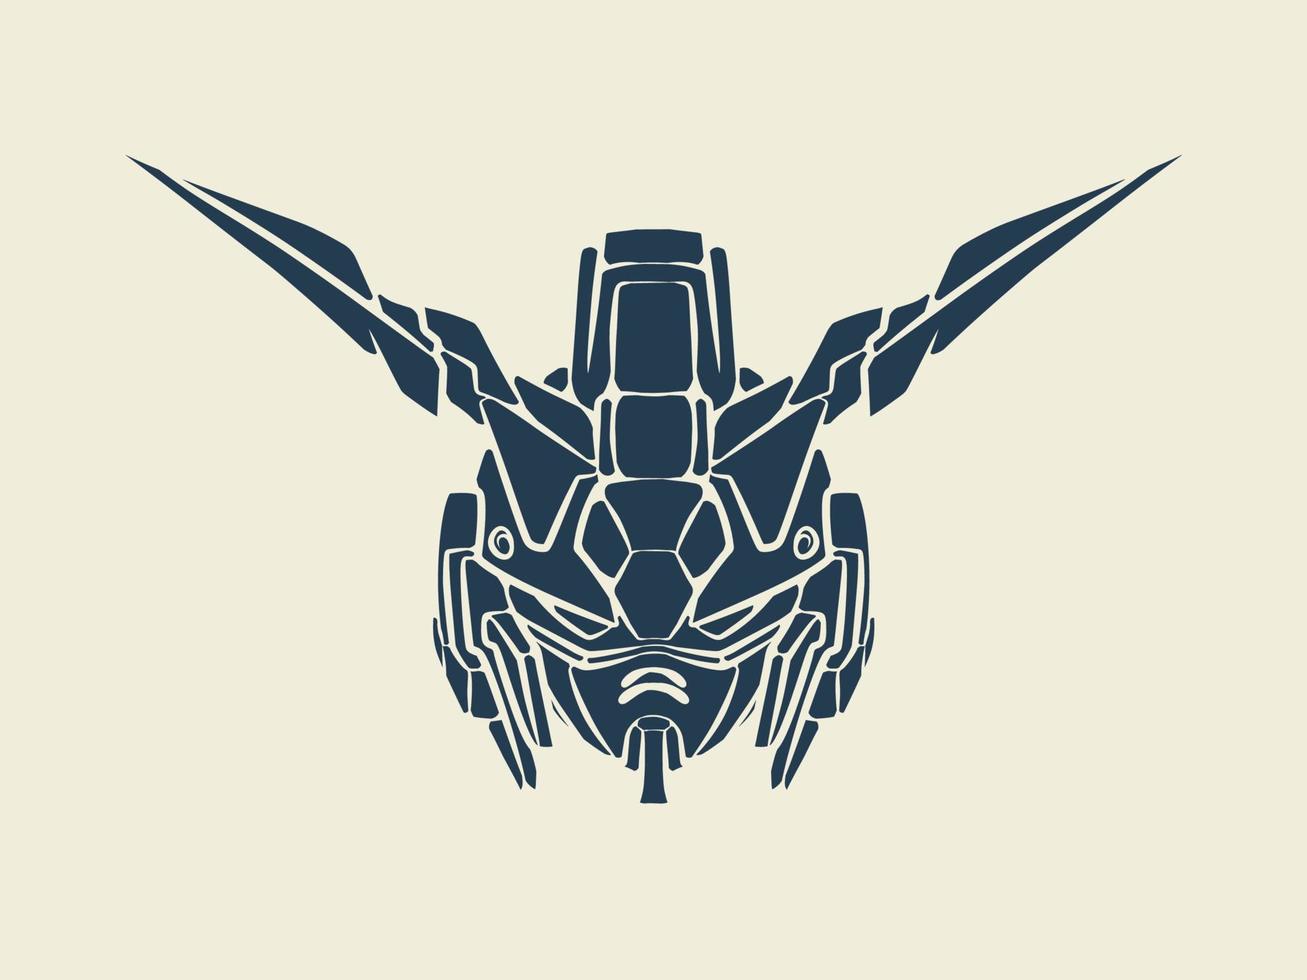 Gundam-Roboterkopf-Vektordesign kostenloser Download vektor